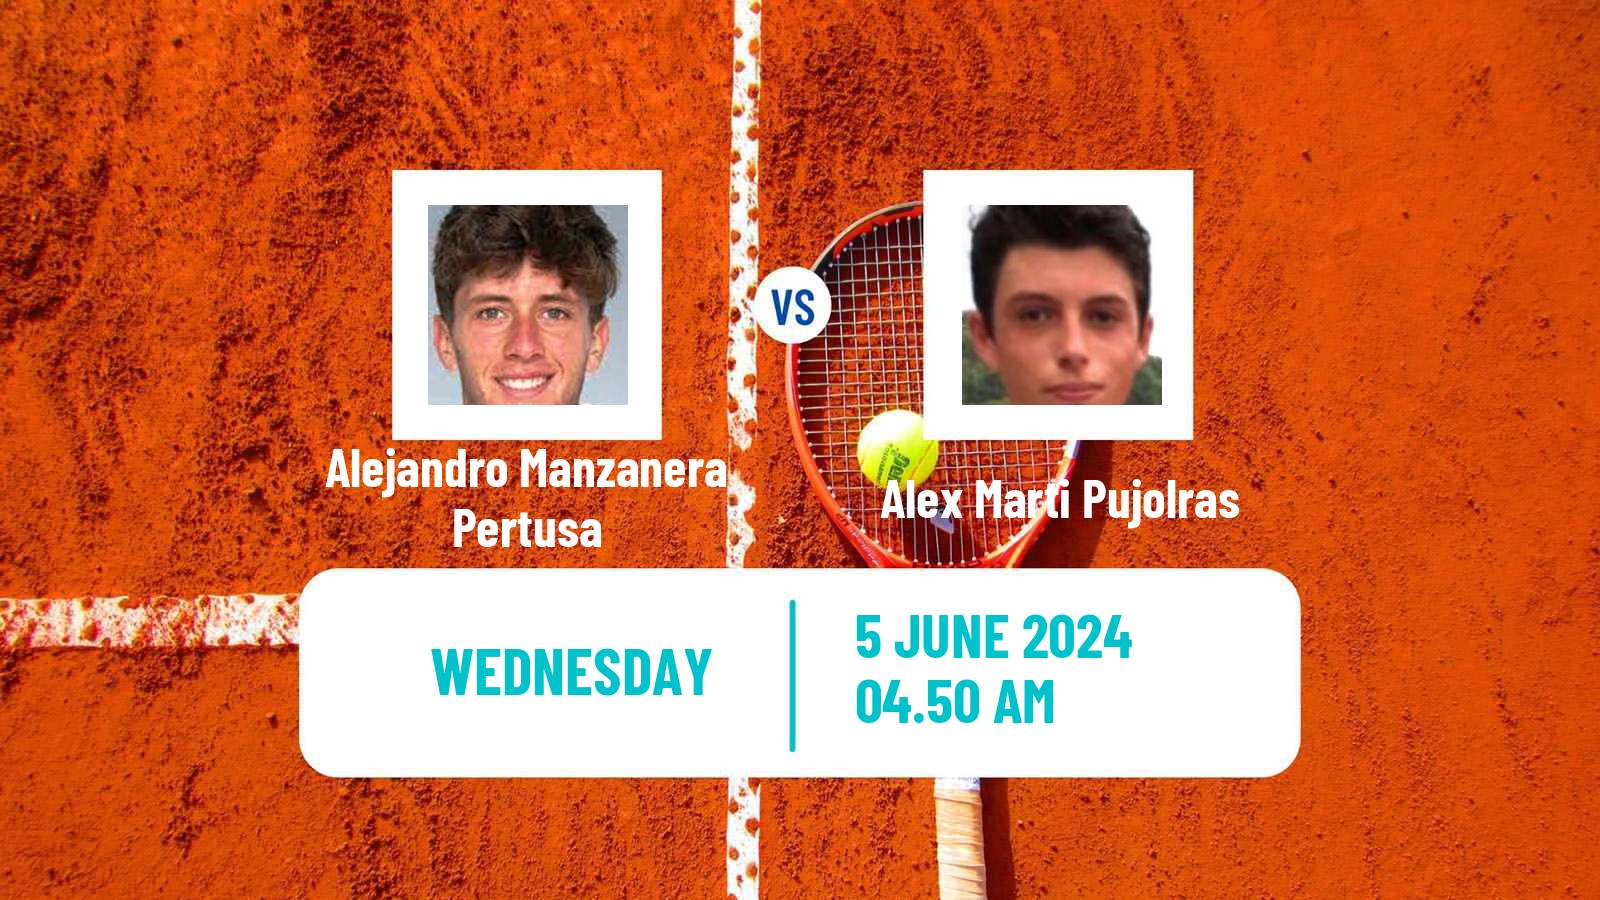 Tennis ITF M25 Cordoba Men Alejandro Manzanera Pertusa - Alex Marti Pujolras